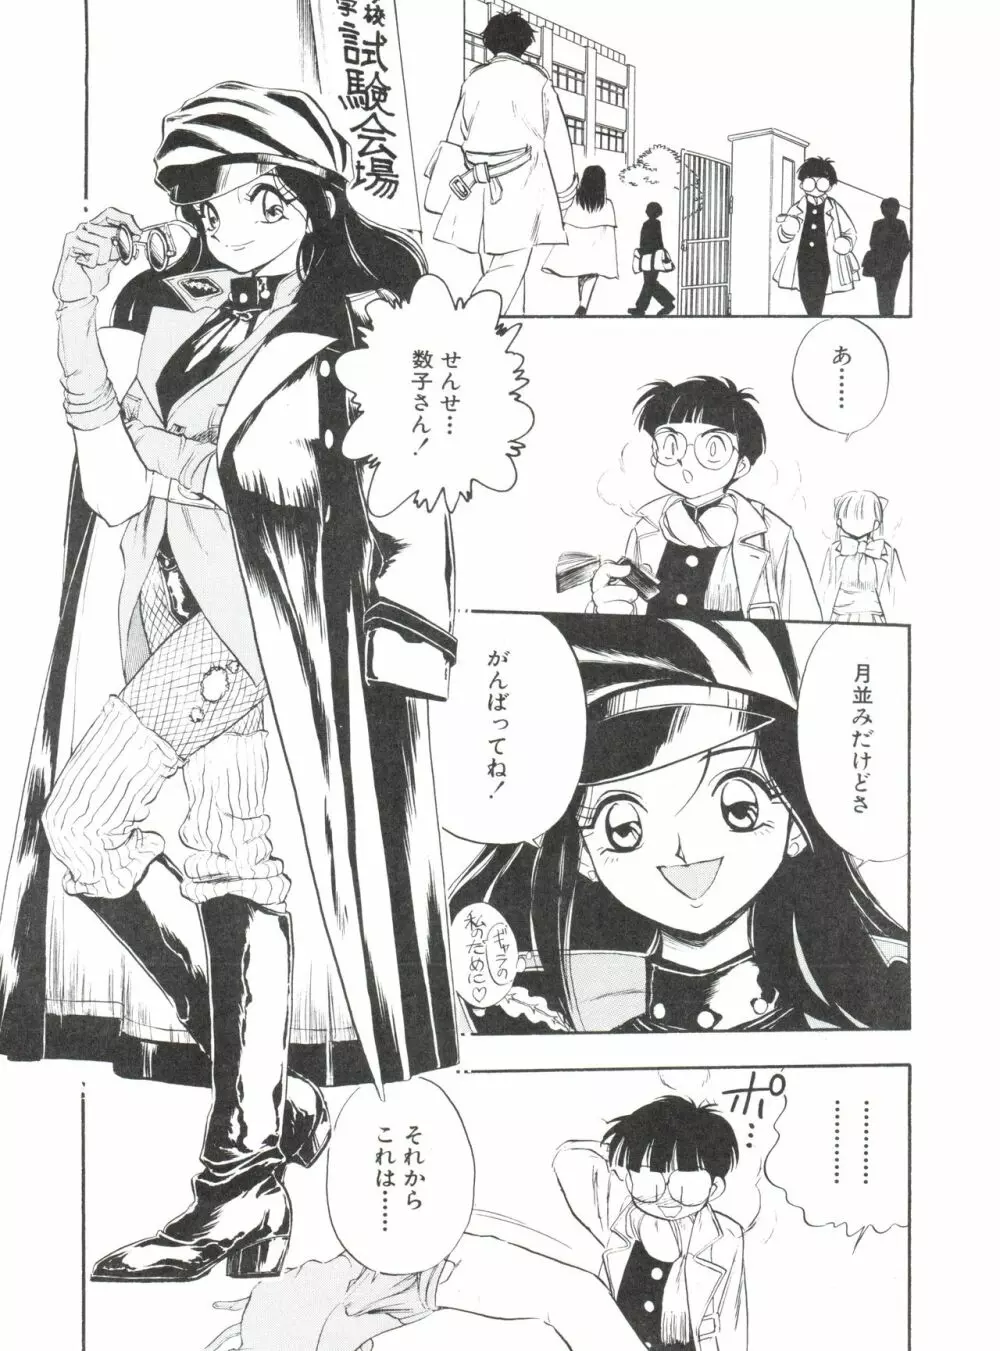 1997 WINTER 電撃犬王 - page72